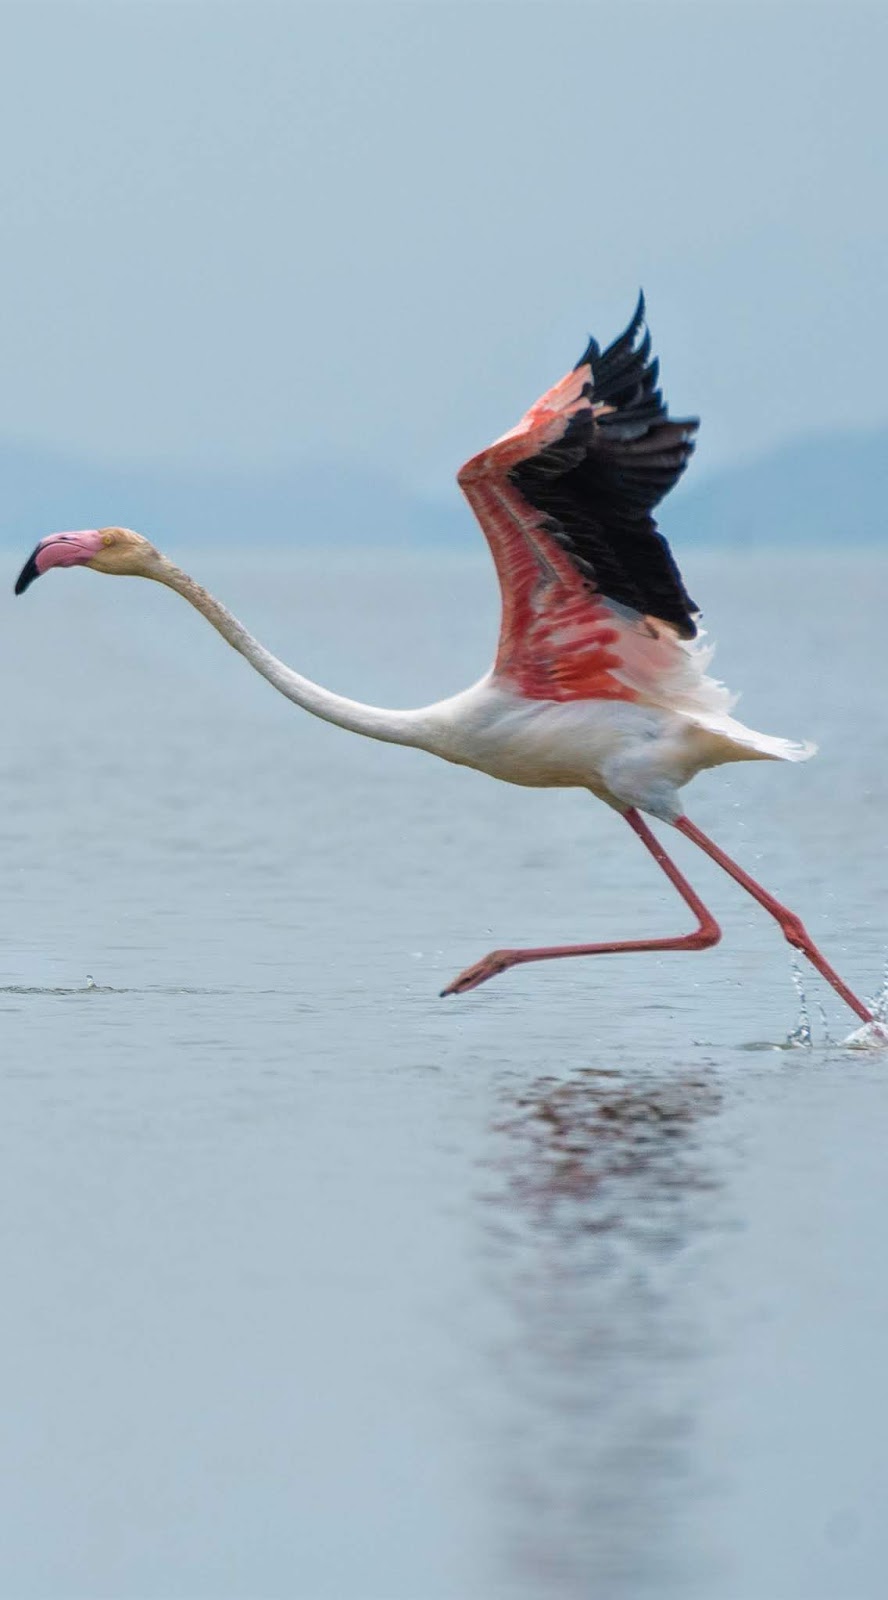 A flamingo taking off.